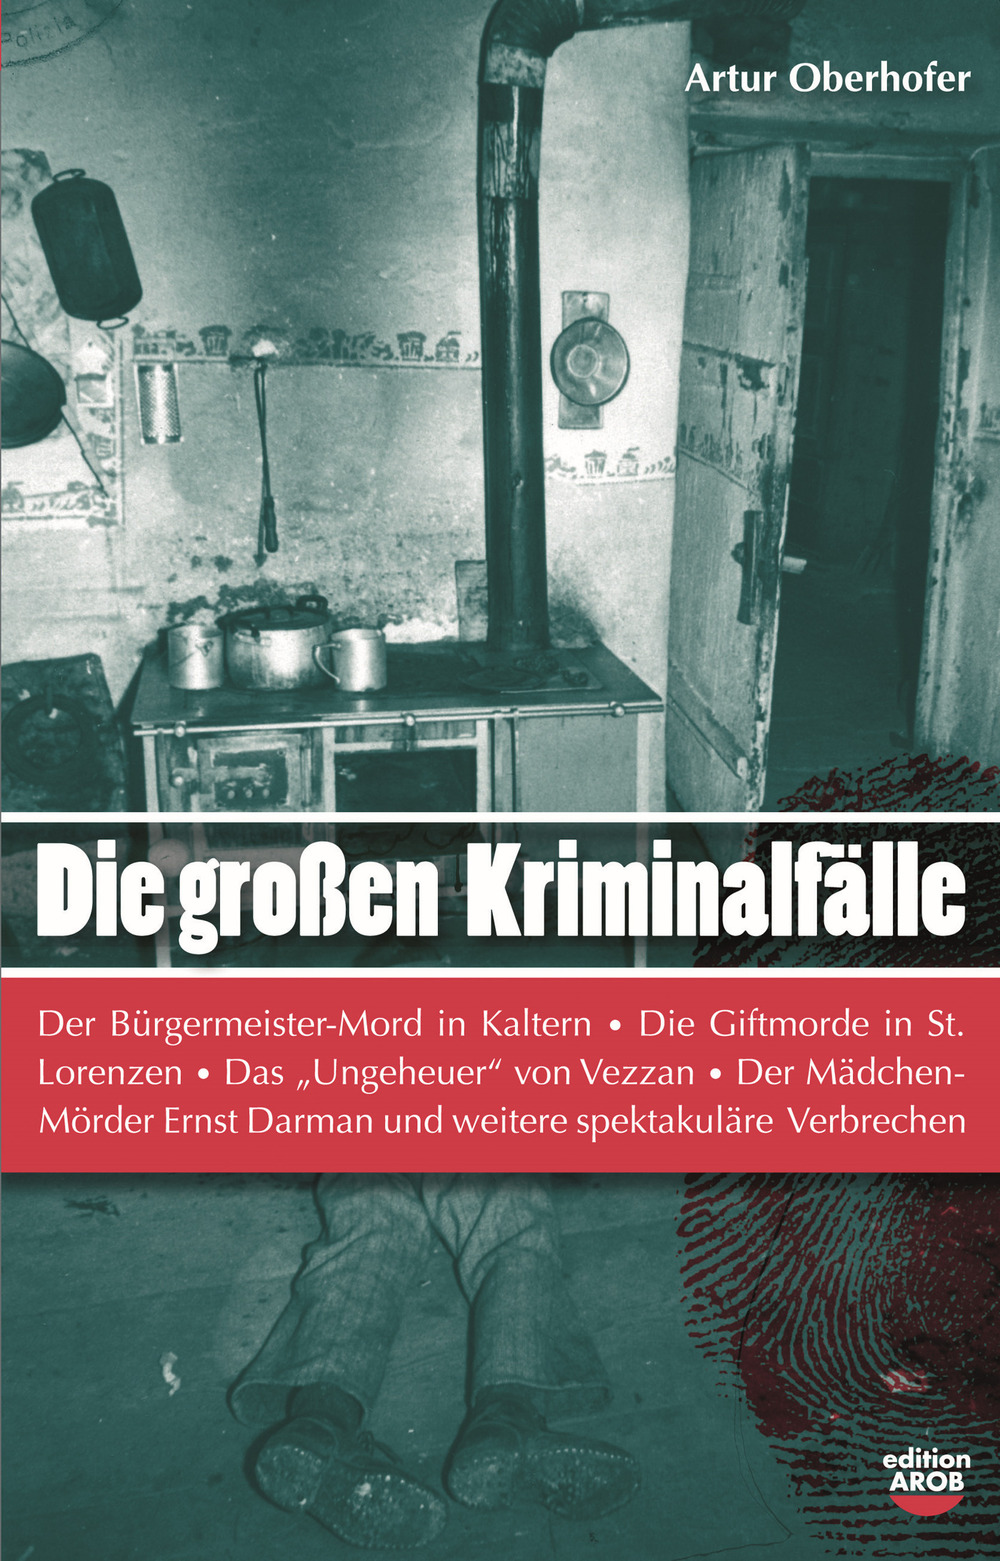 Libri Artur Oberhofer - Die Grossen Kriminalfalle In Sudtirol Vol 01 NUOVO SIGILLATO SUBITO DISPONIBILE